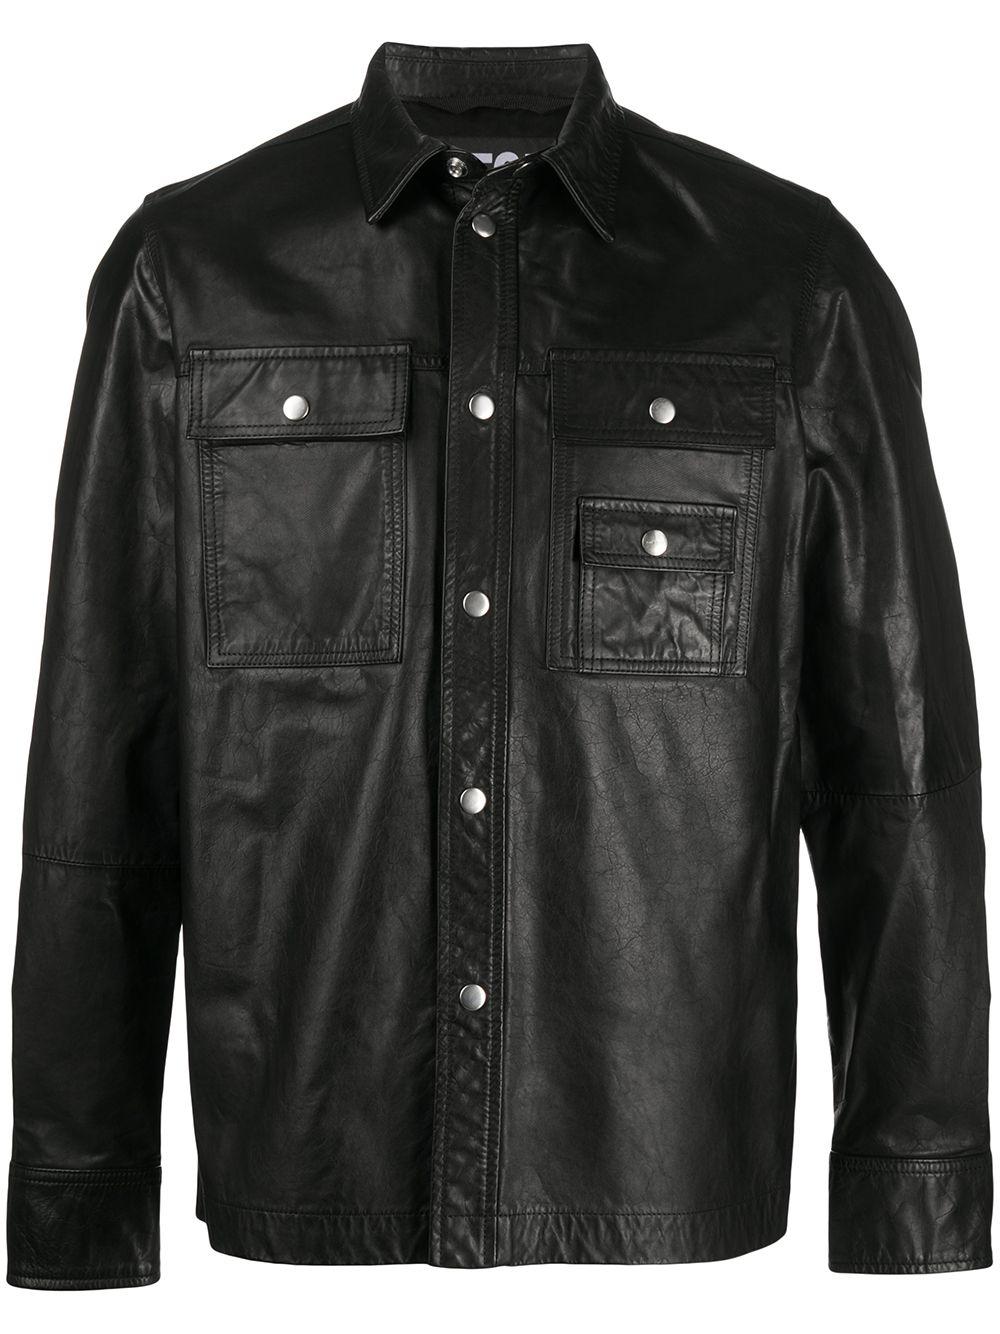 DIESEL Leather Overshirt in Black for Men - Lyst